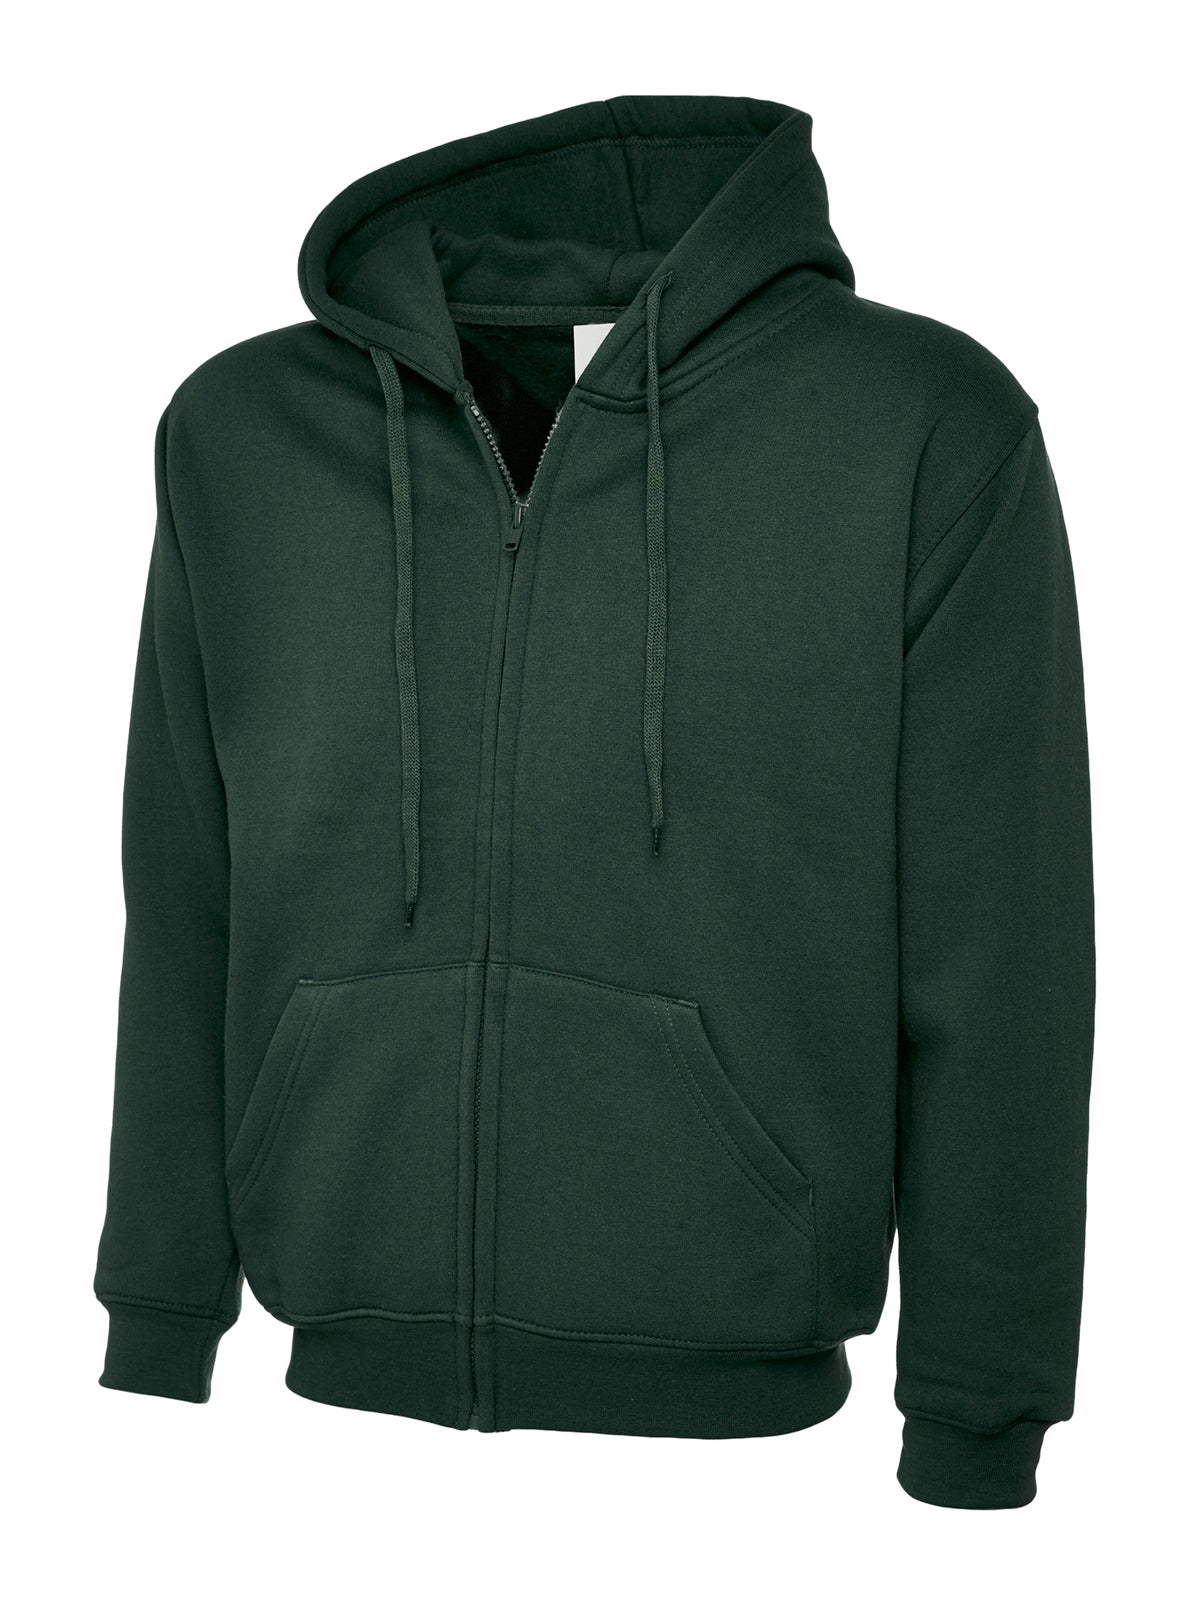 Uneek Adults Unisex Classic Full Zip Hooded Sweatshirt UC504 - Bottle Green